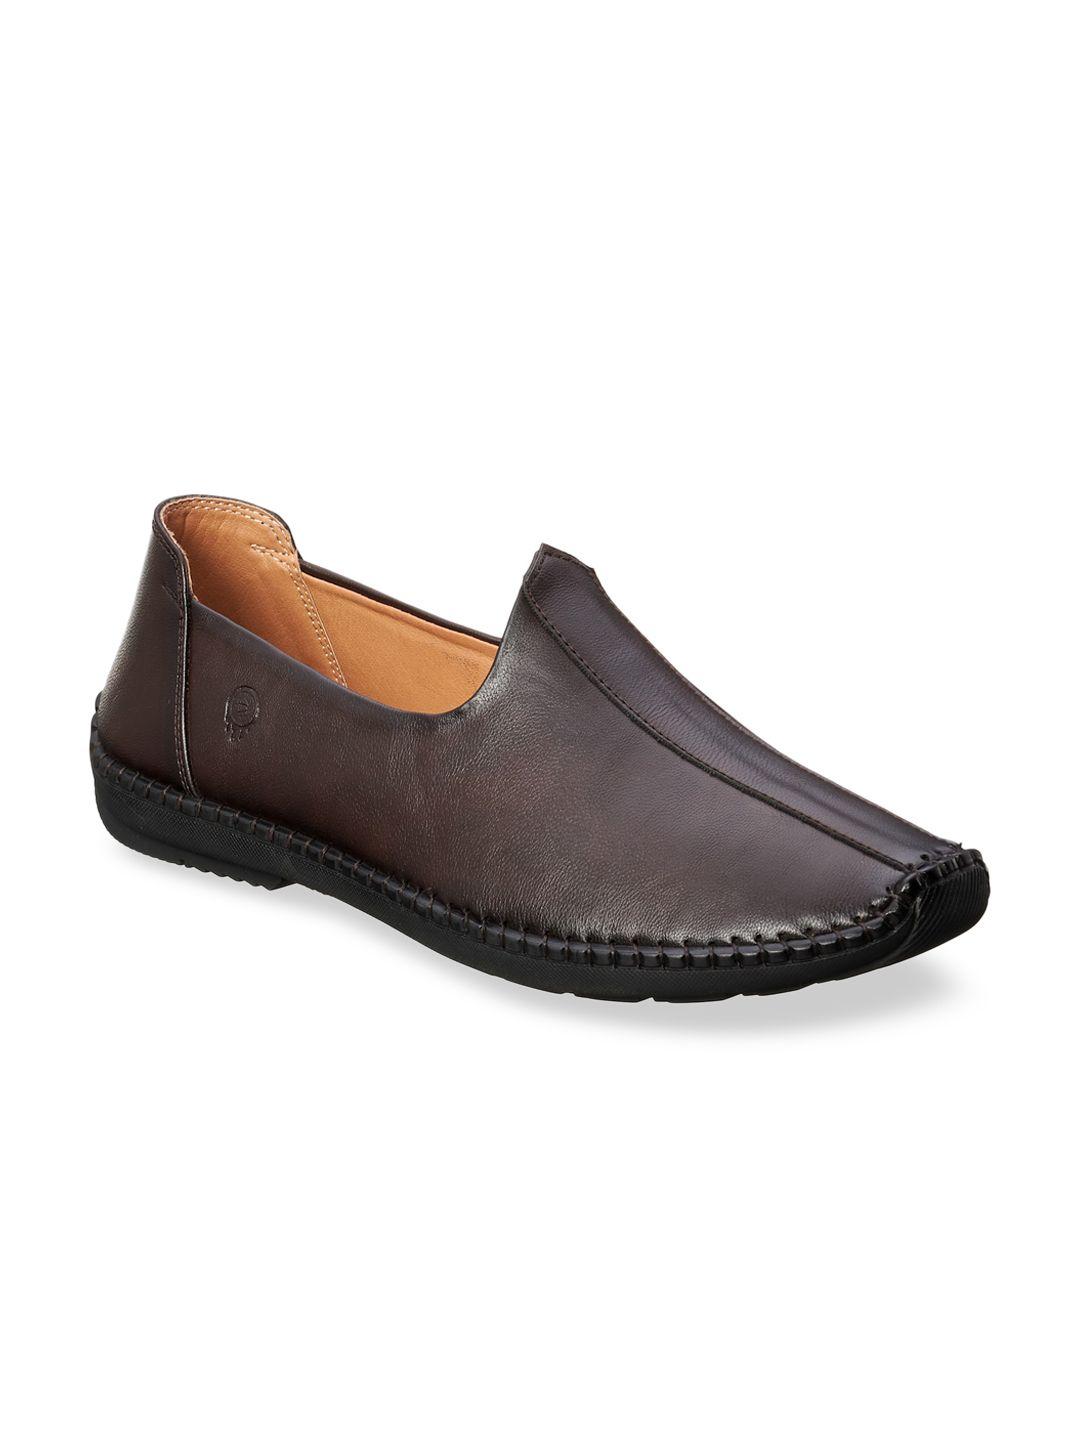 duke-men-brown-driving-shoes